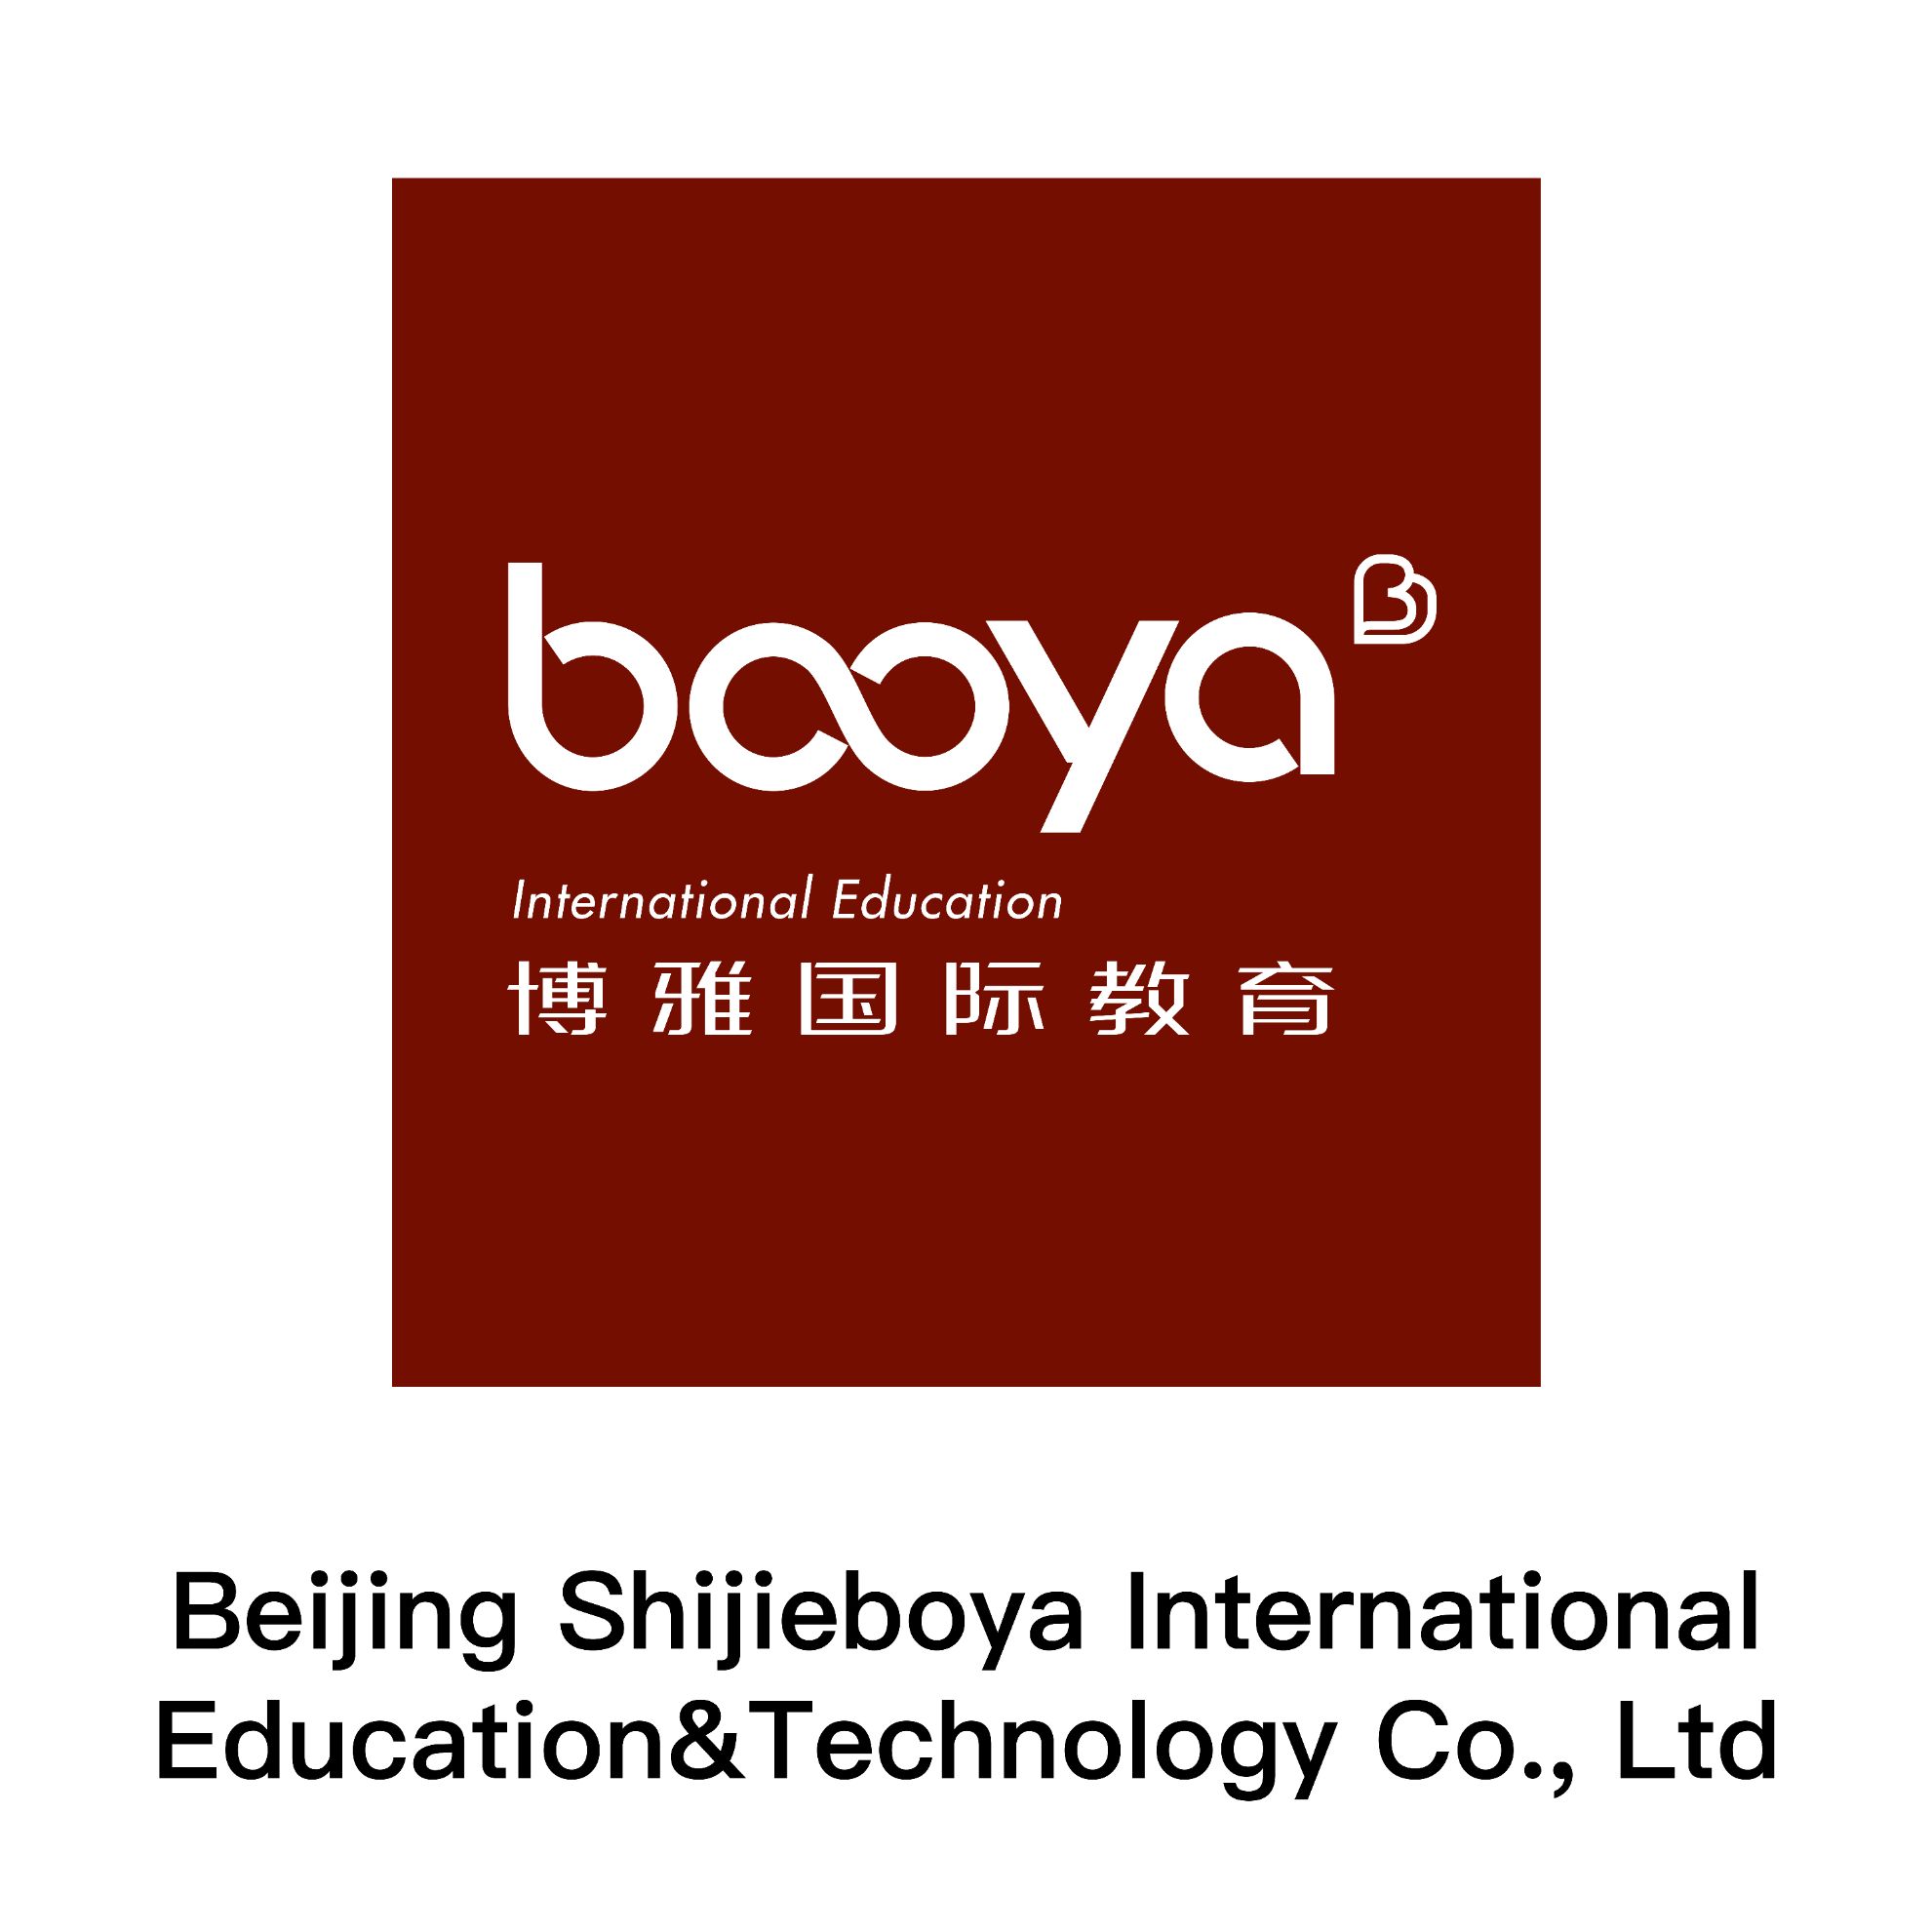 Beijing Shijiebooya International Education Company logo